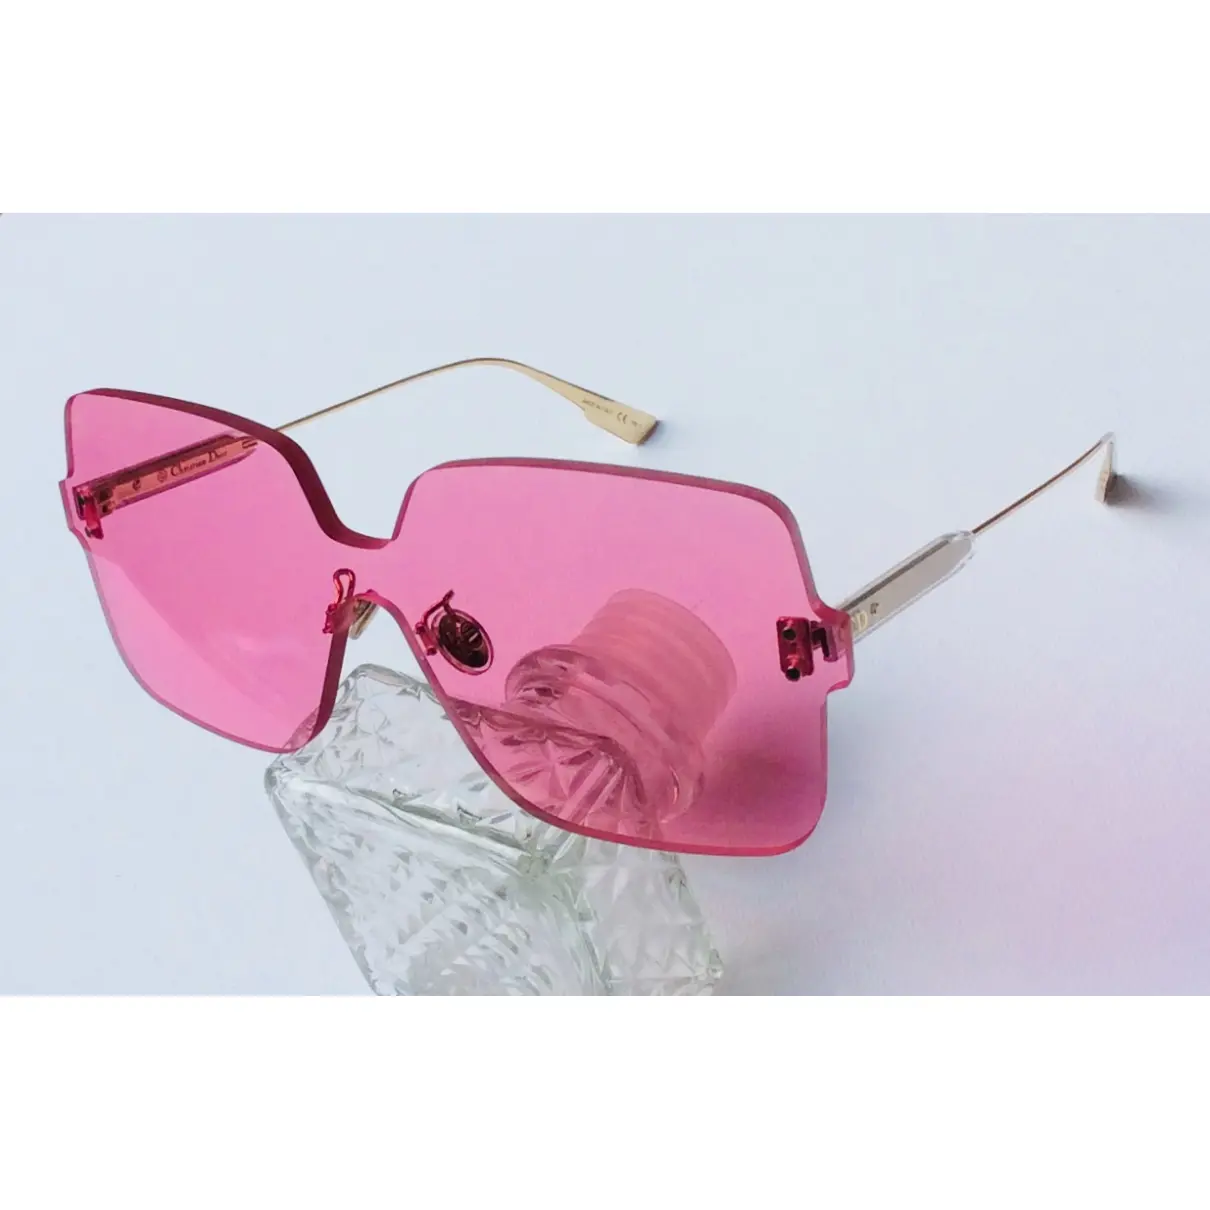 Buy Dior Color Quake 1 oversized sunglasses online